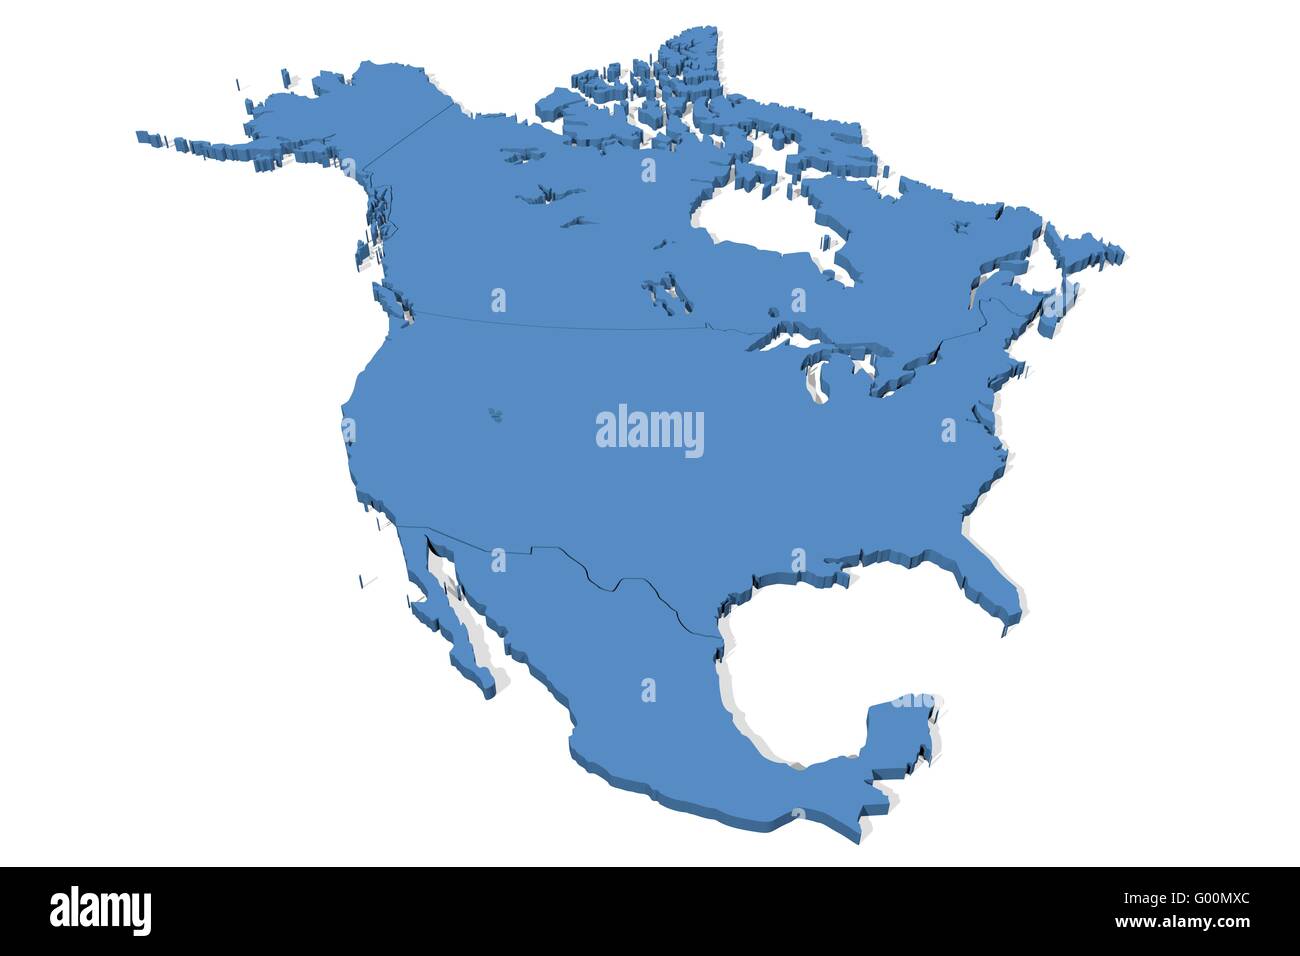 Mapa Politico De America Del Norte Fotografias E Imagenes De Alta Images